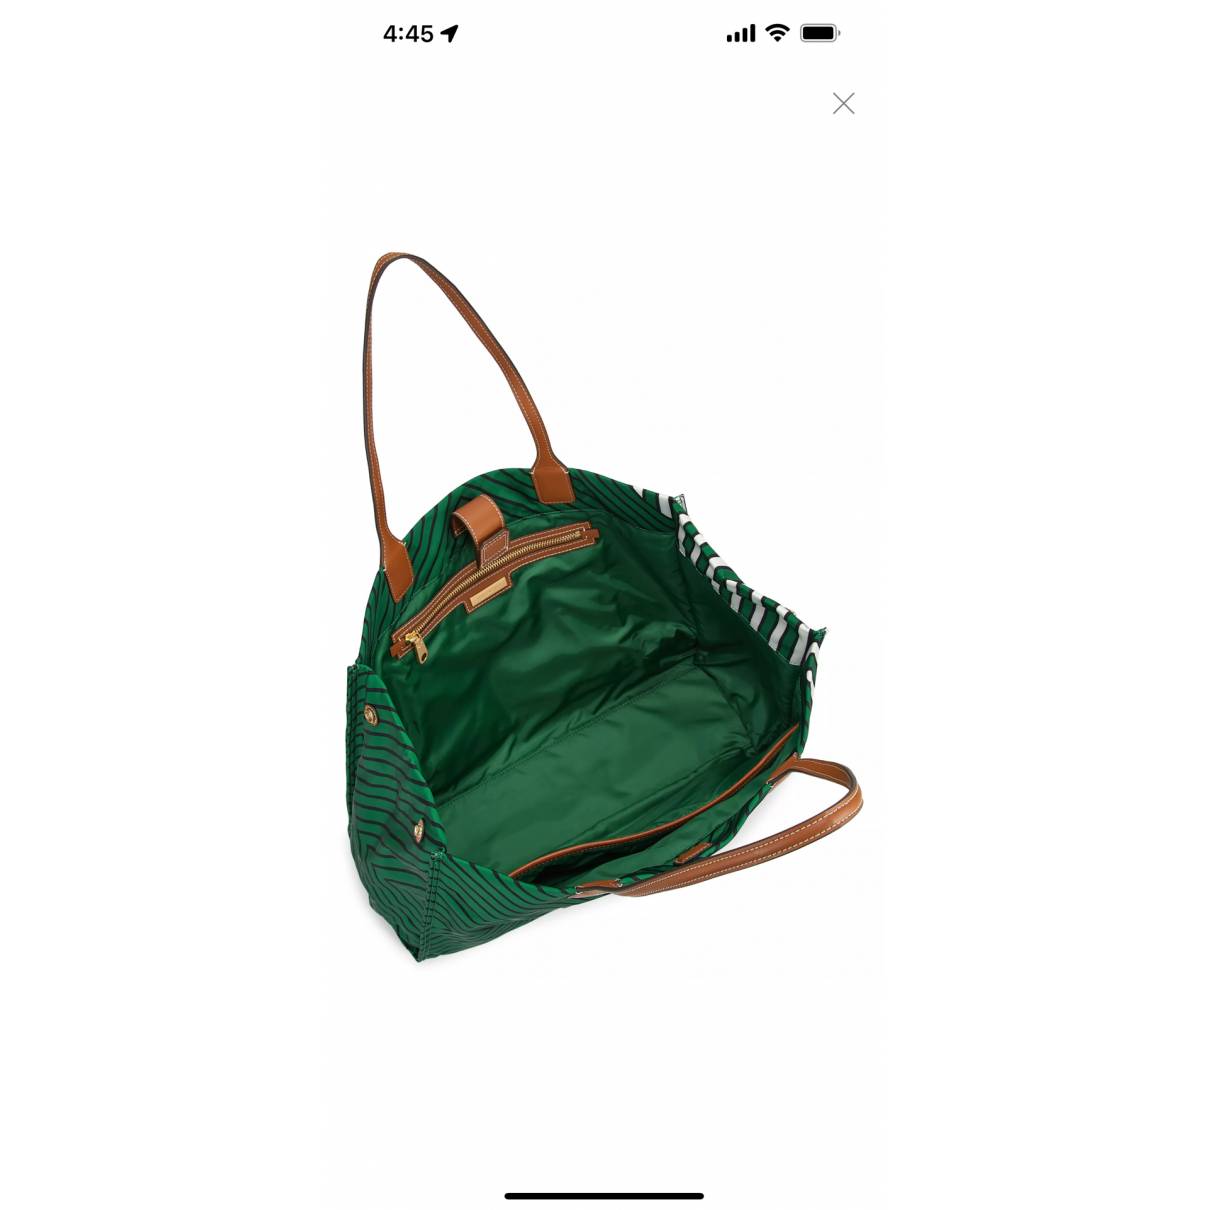 tory burch green tote bag